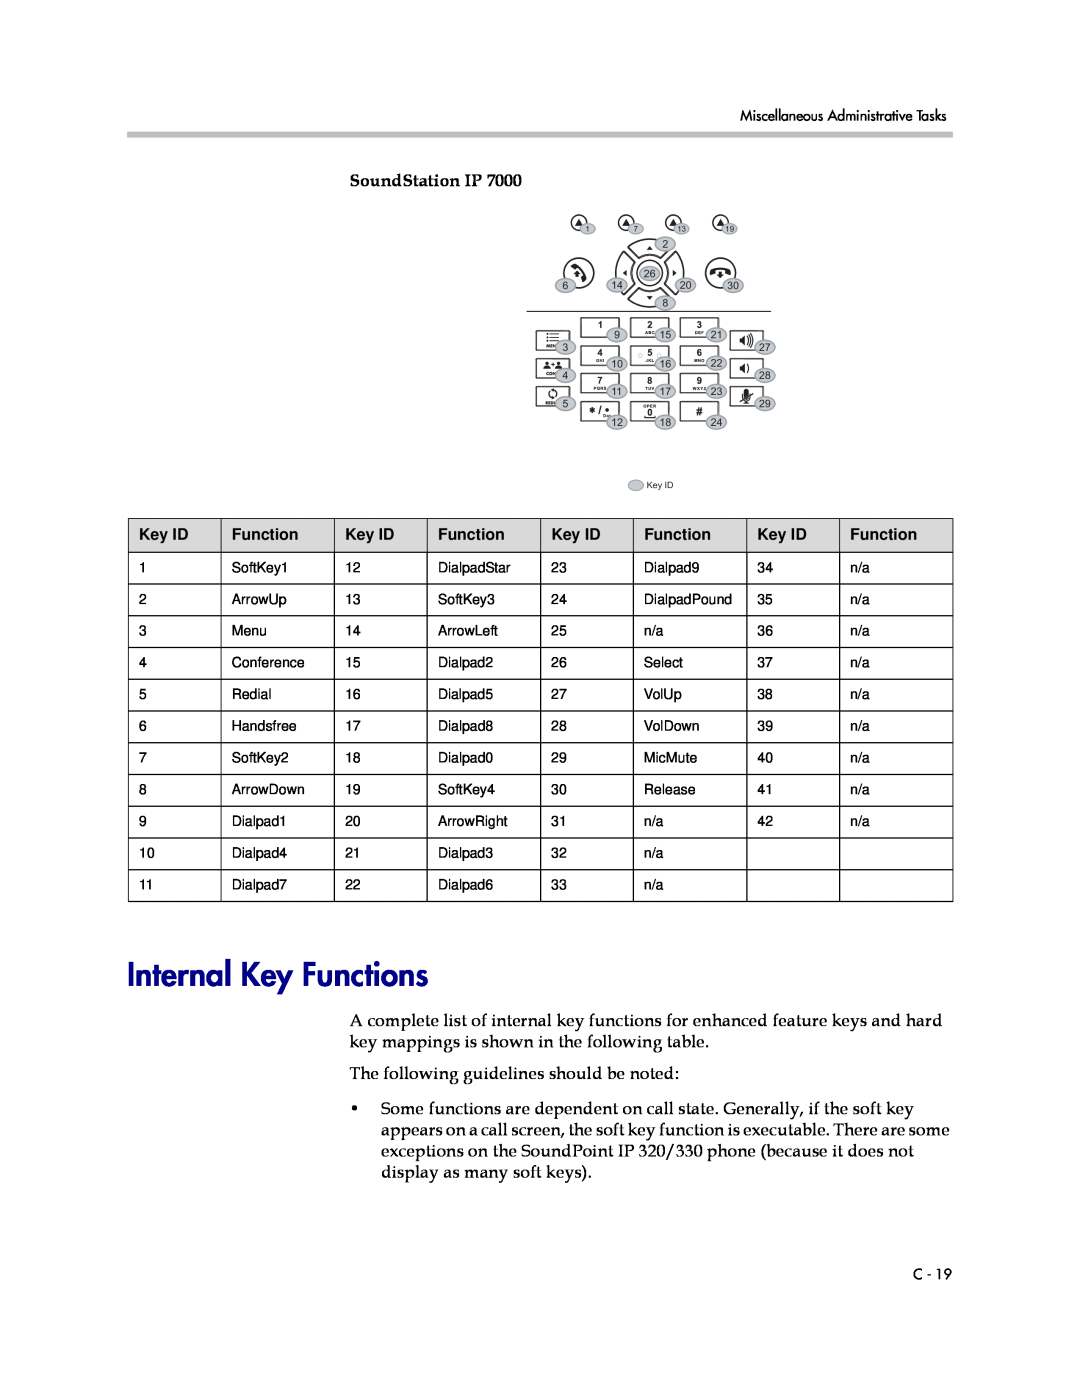 Polycom SIP 3.1 manual Internal Key Functions, SoundStation IP 